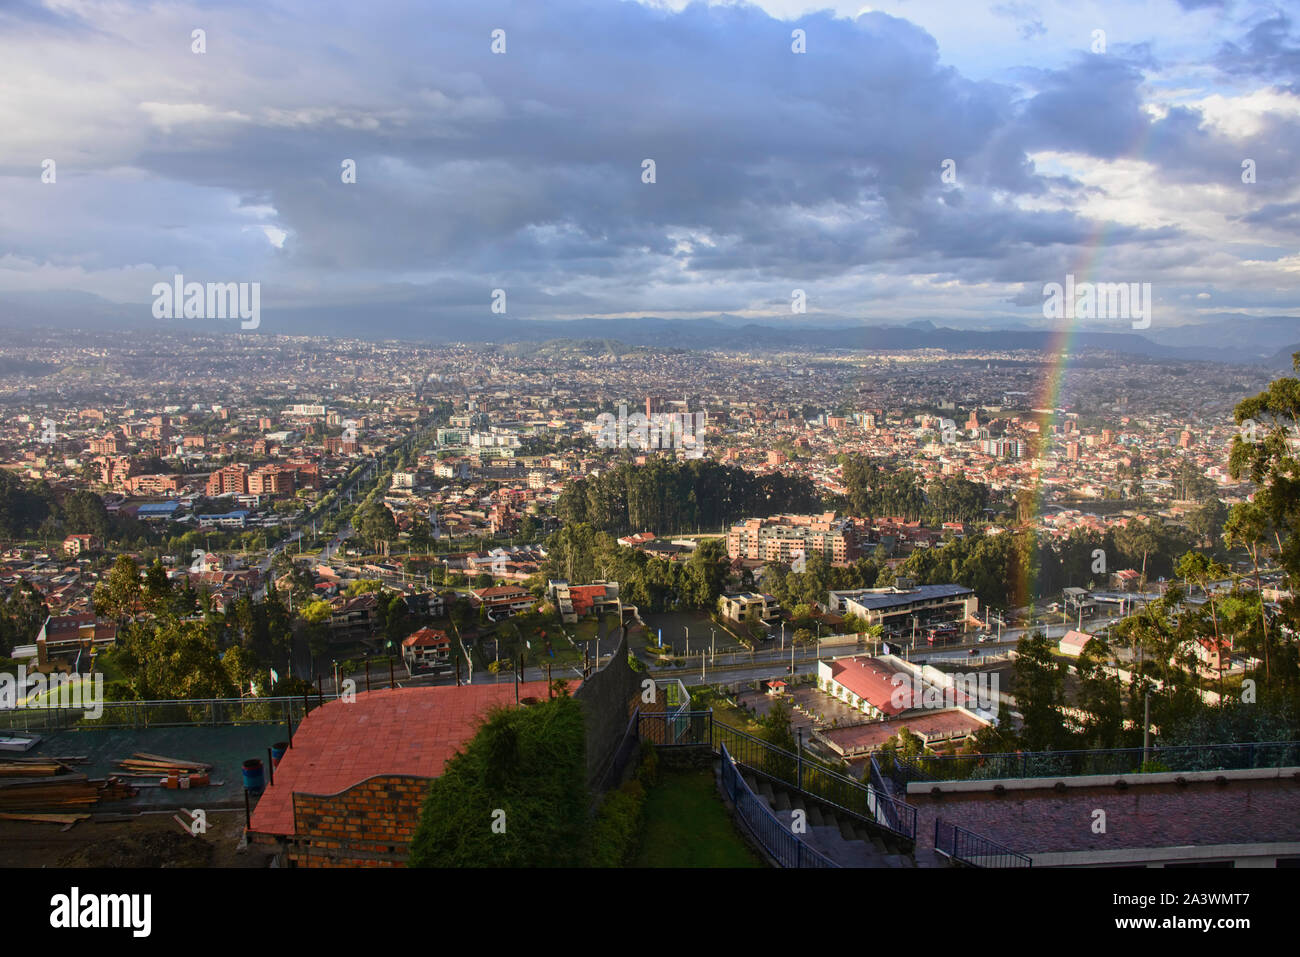 Beautiful rainbow, Cuenca, Ecuador Stock Photo